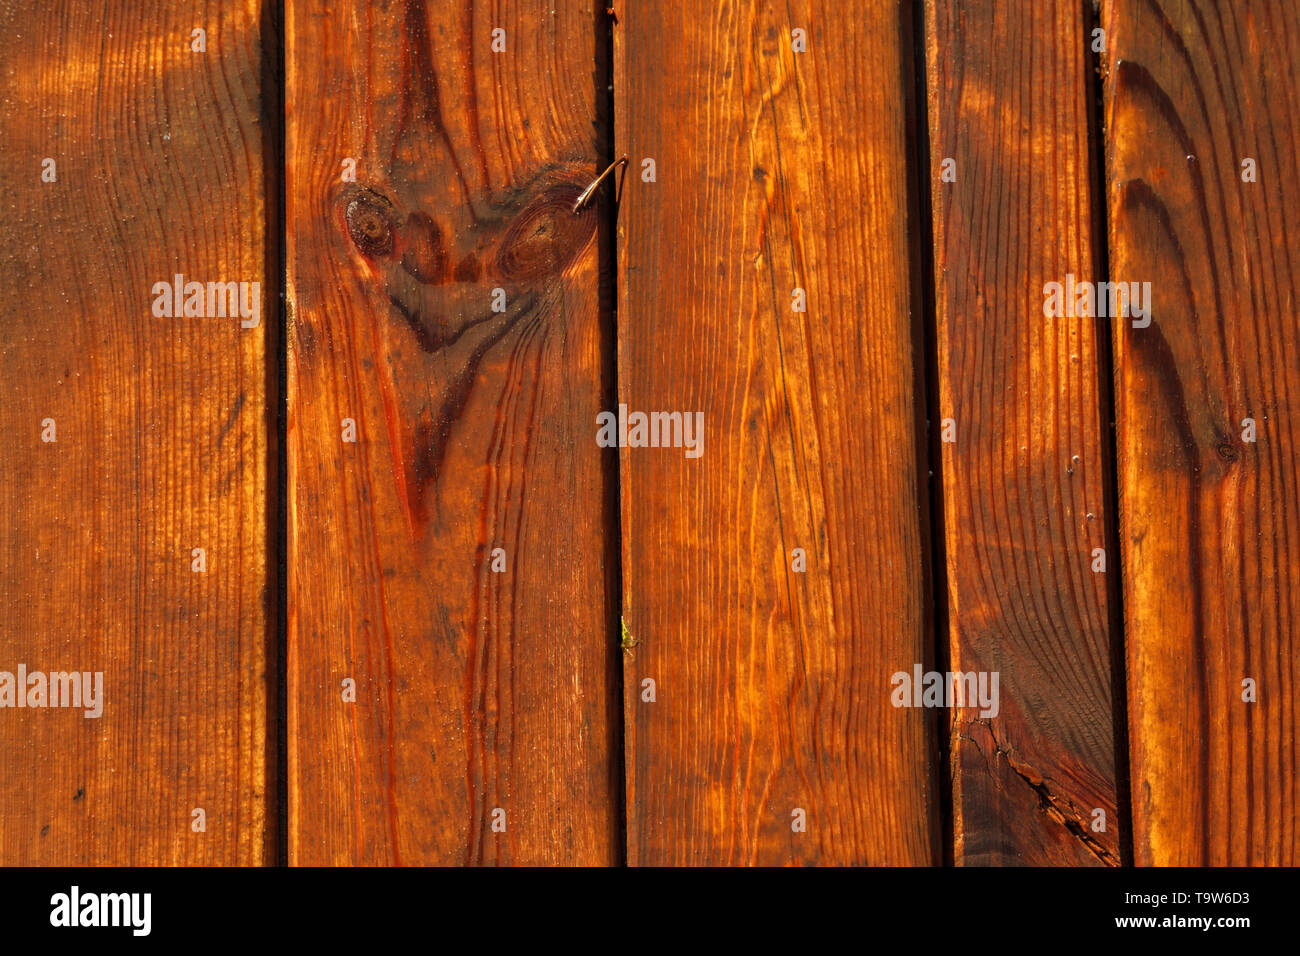 Nasse Holzböden. Nassen Holzplanken Textur. Holz- Strand weg. Holzbrett Hintergrund. Vertikale Richtung. Stockfoto